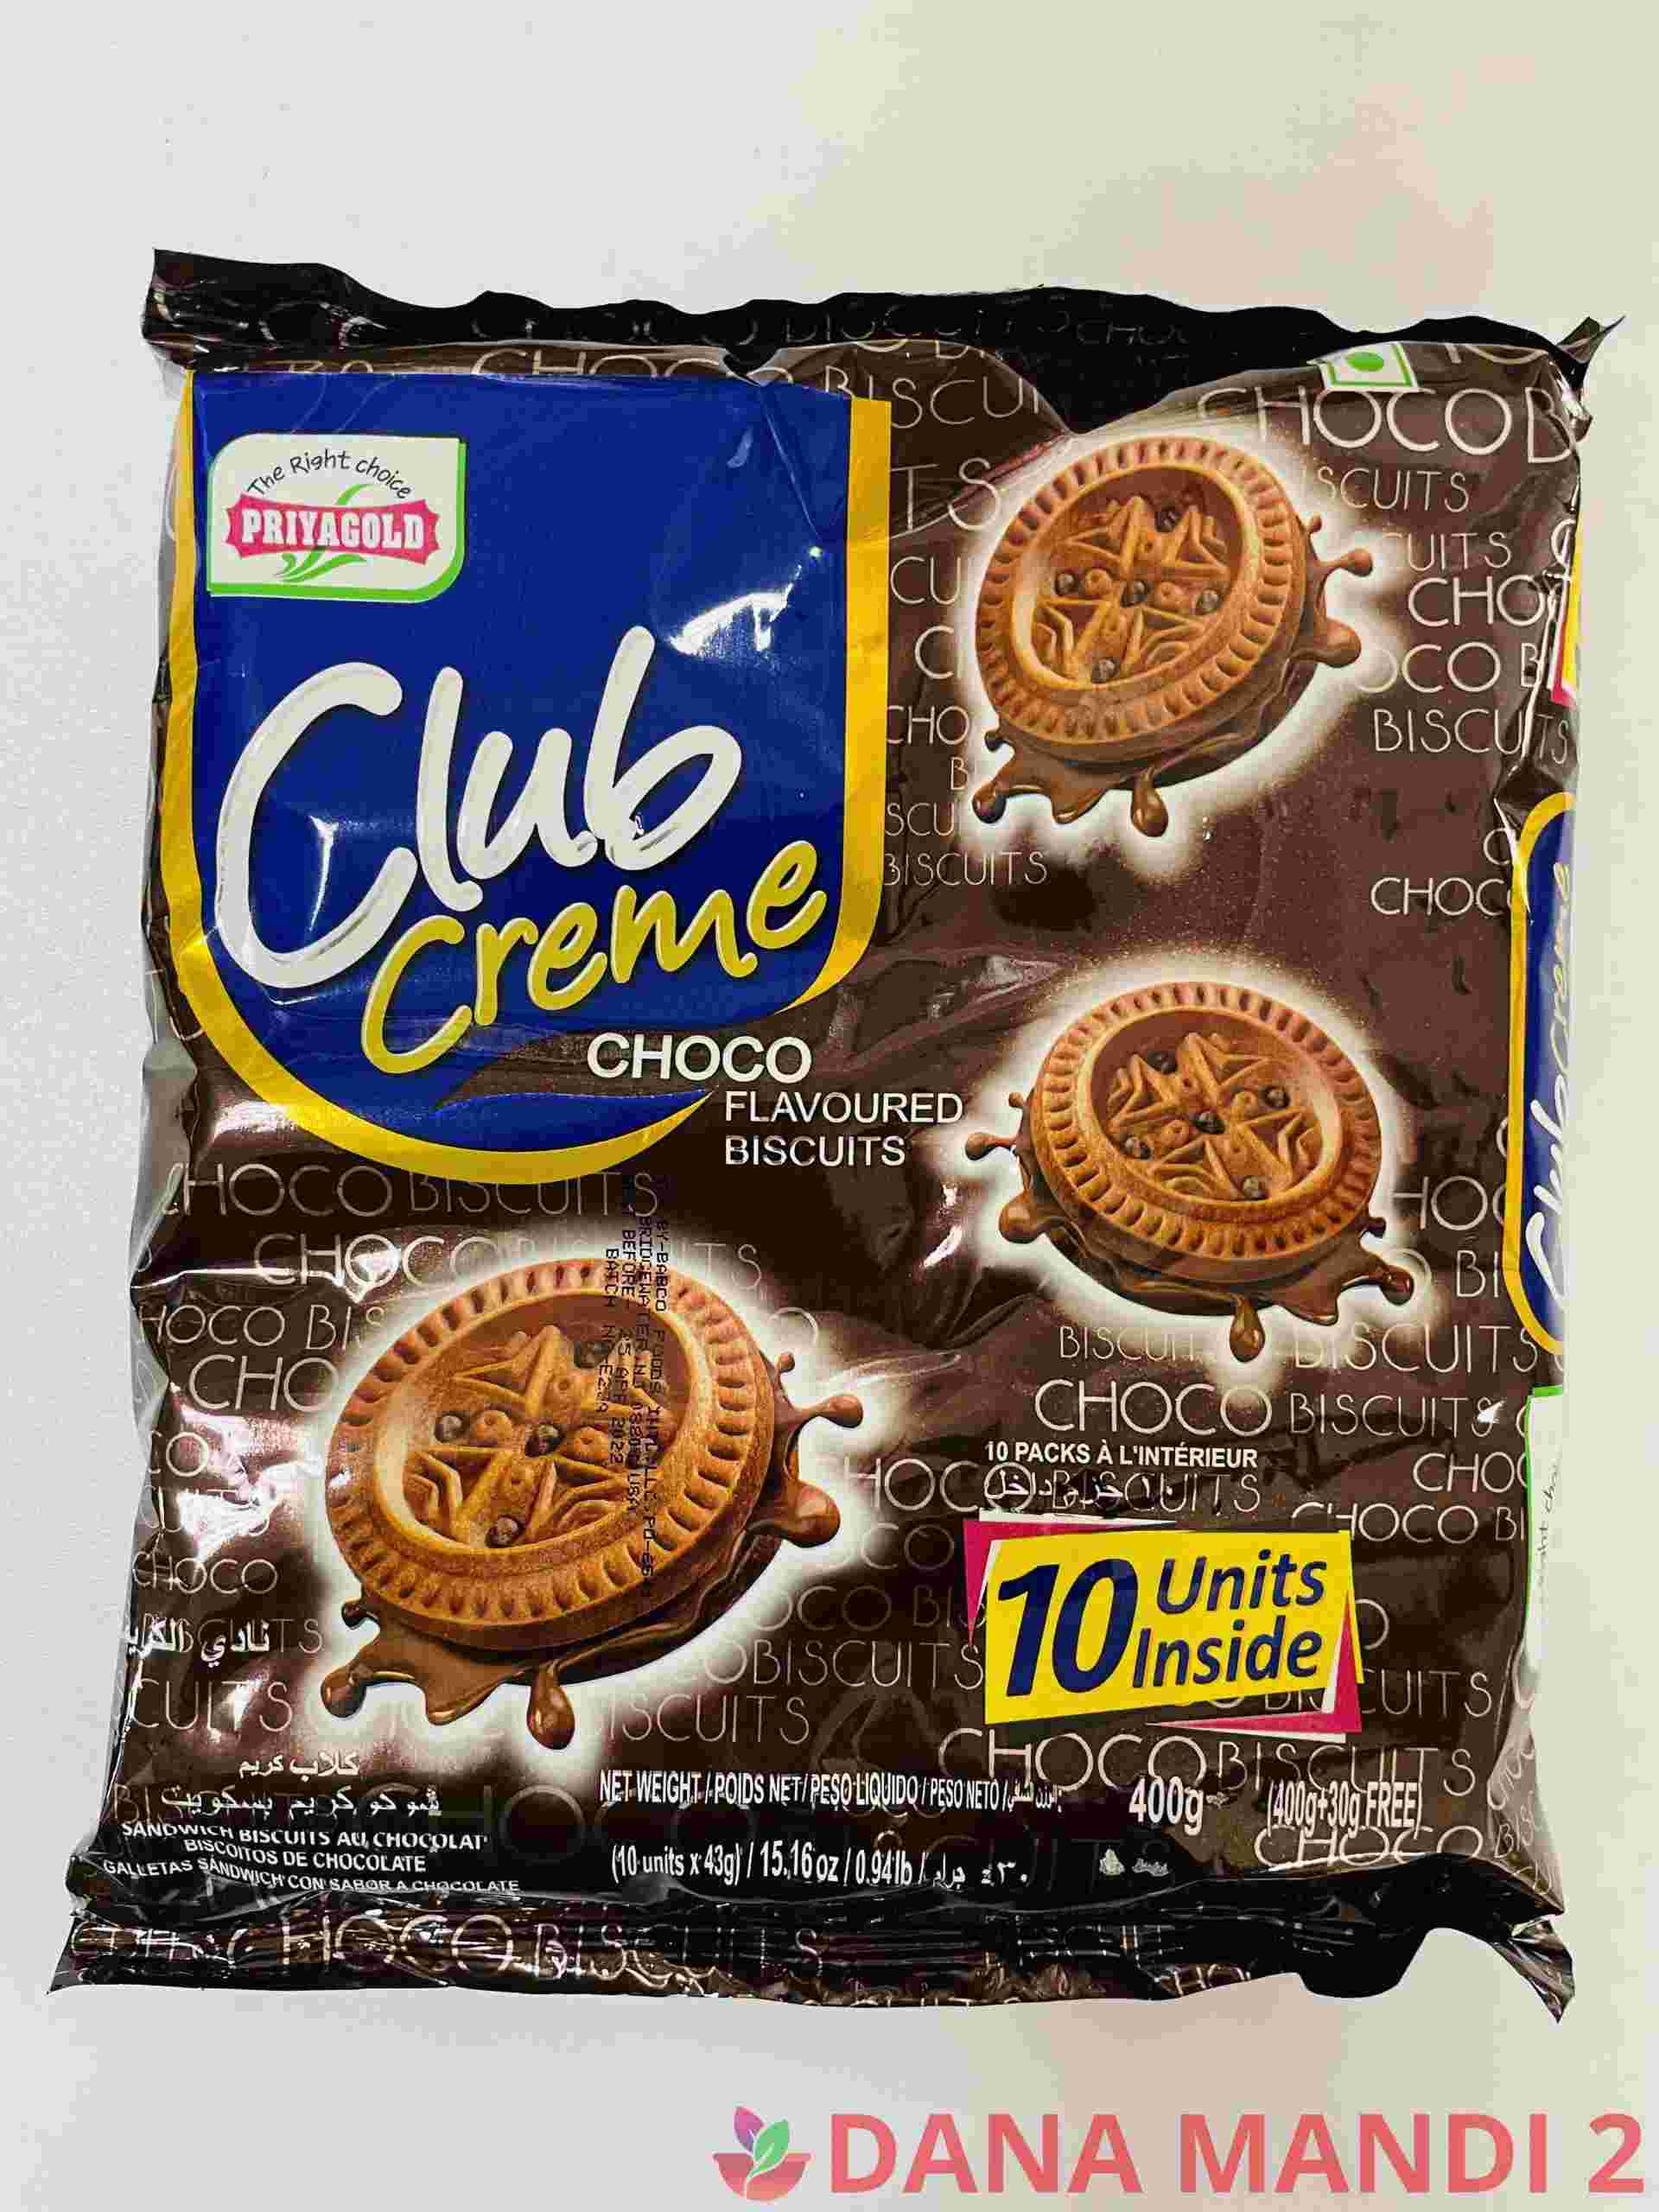 Priyagold Club Crème Choco